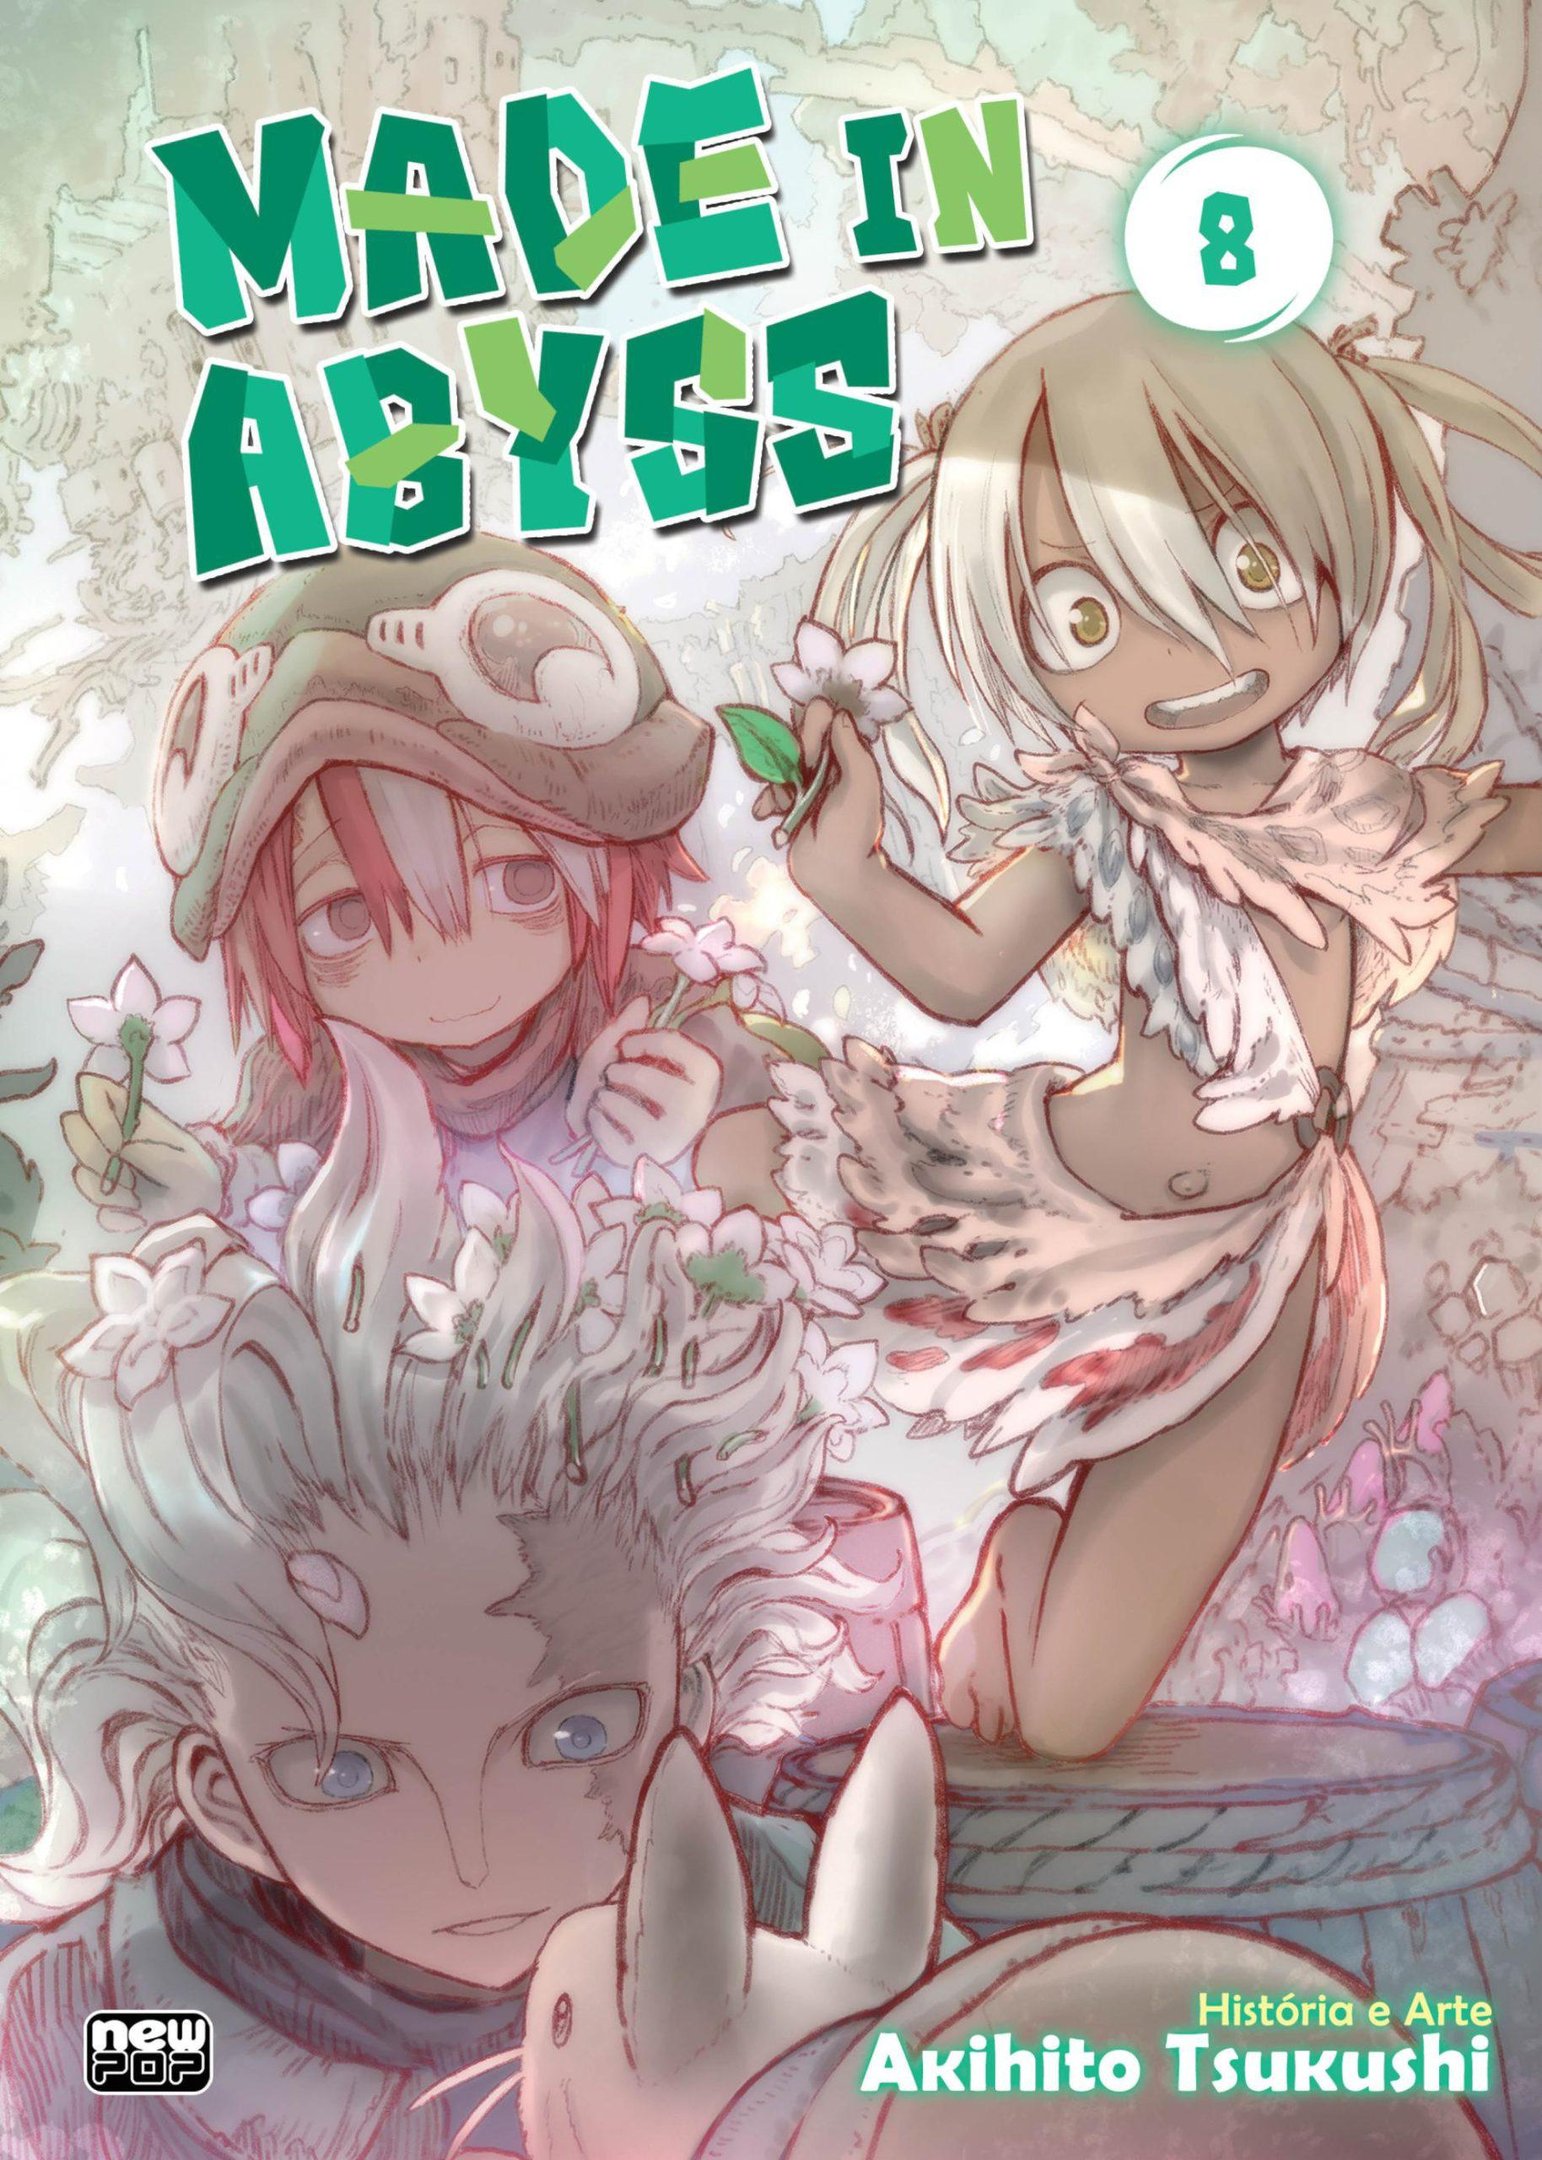 Vejam Made In Abyss, é um ótimo anime : r/brasil